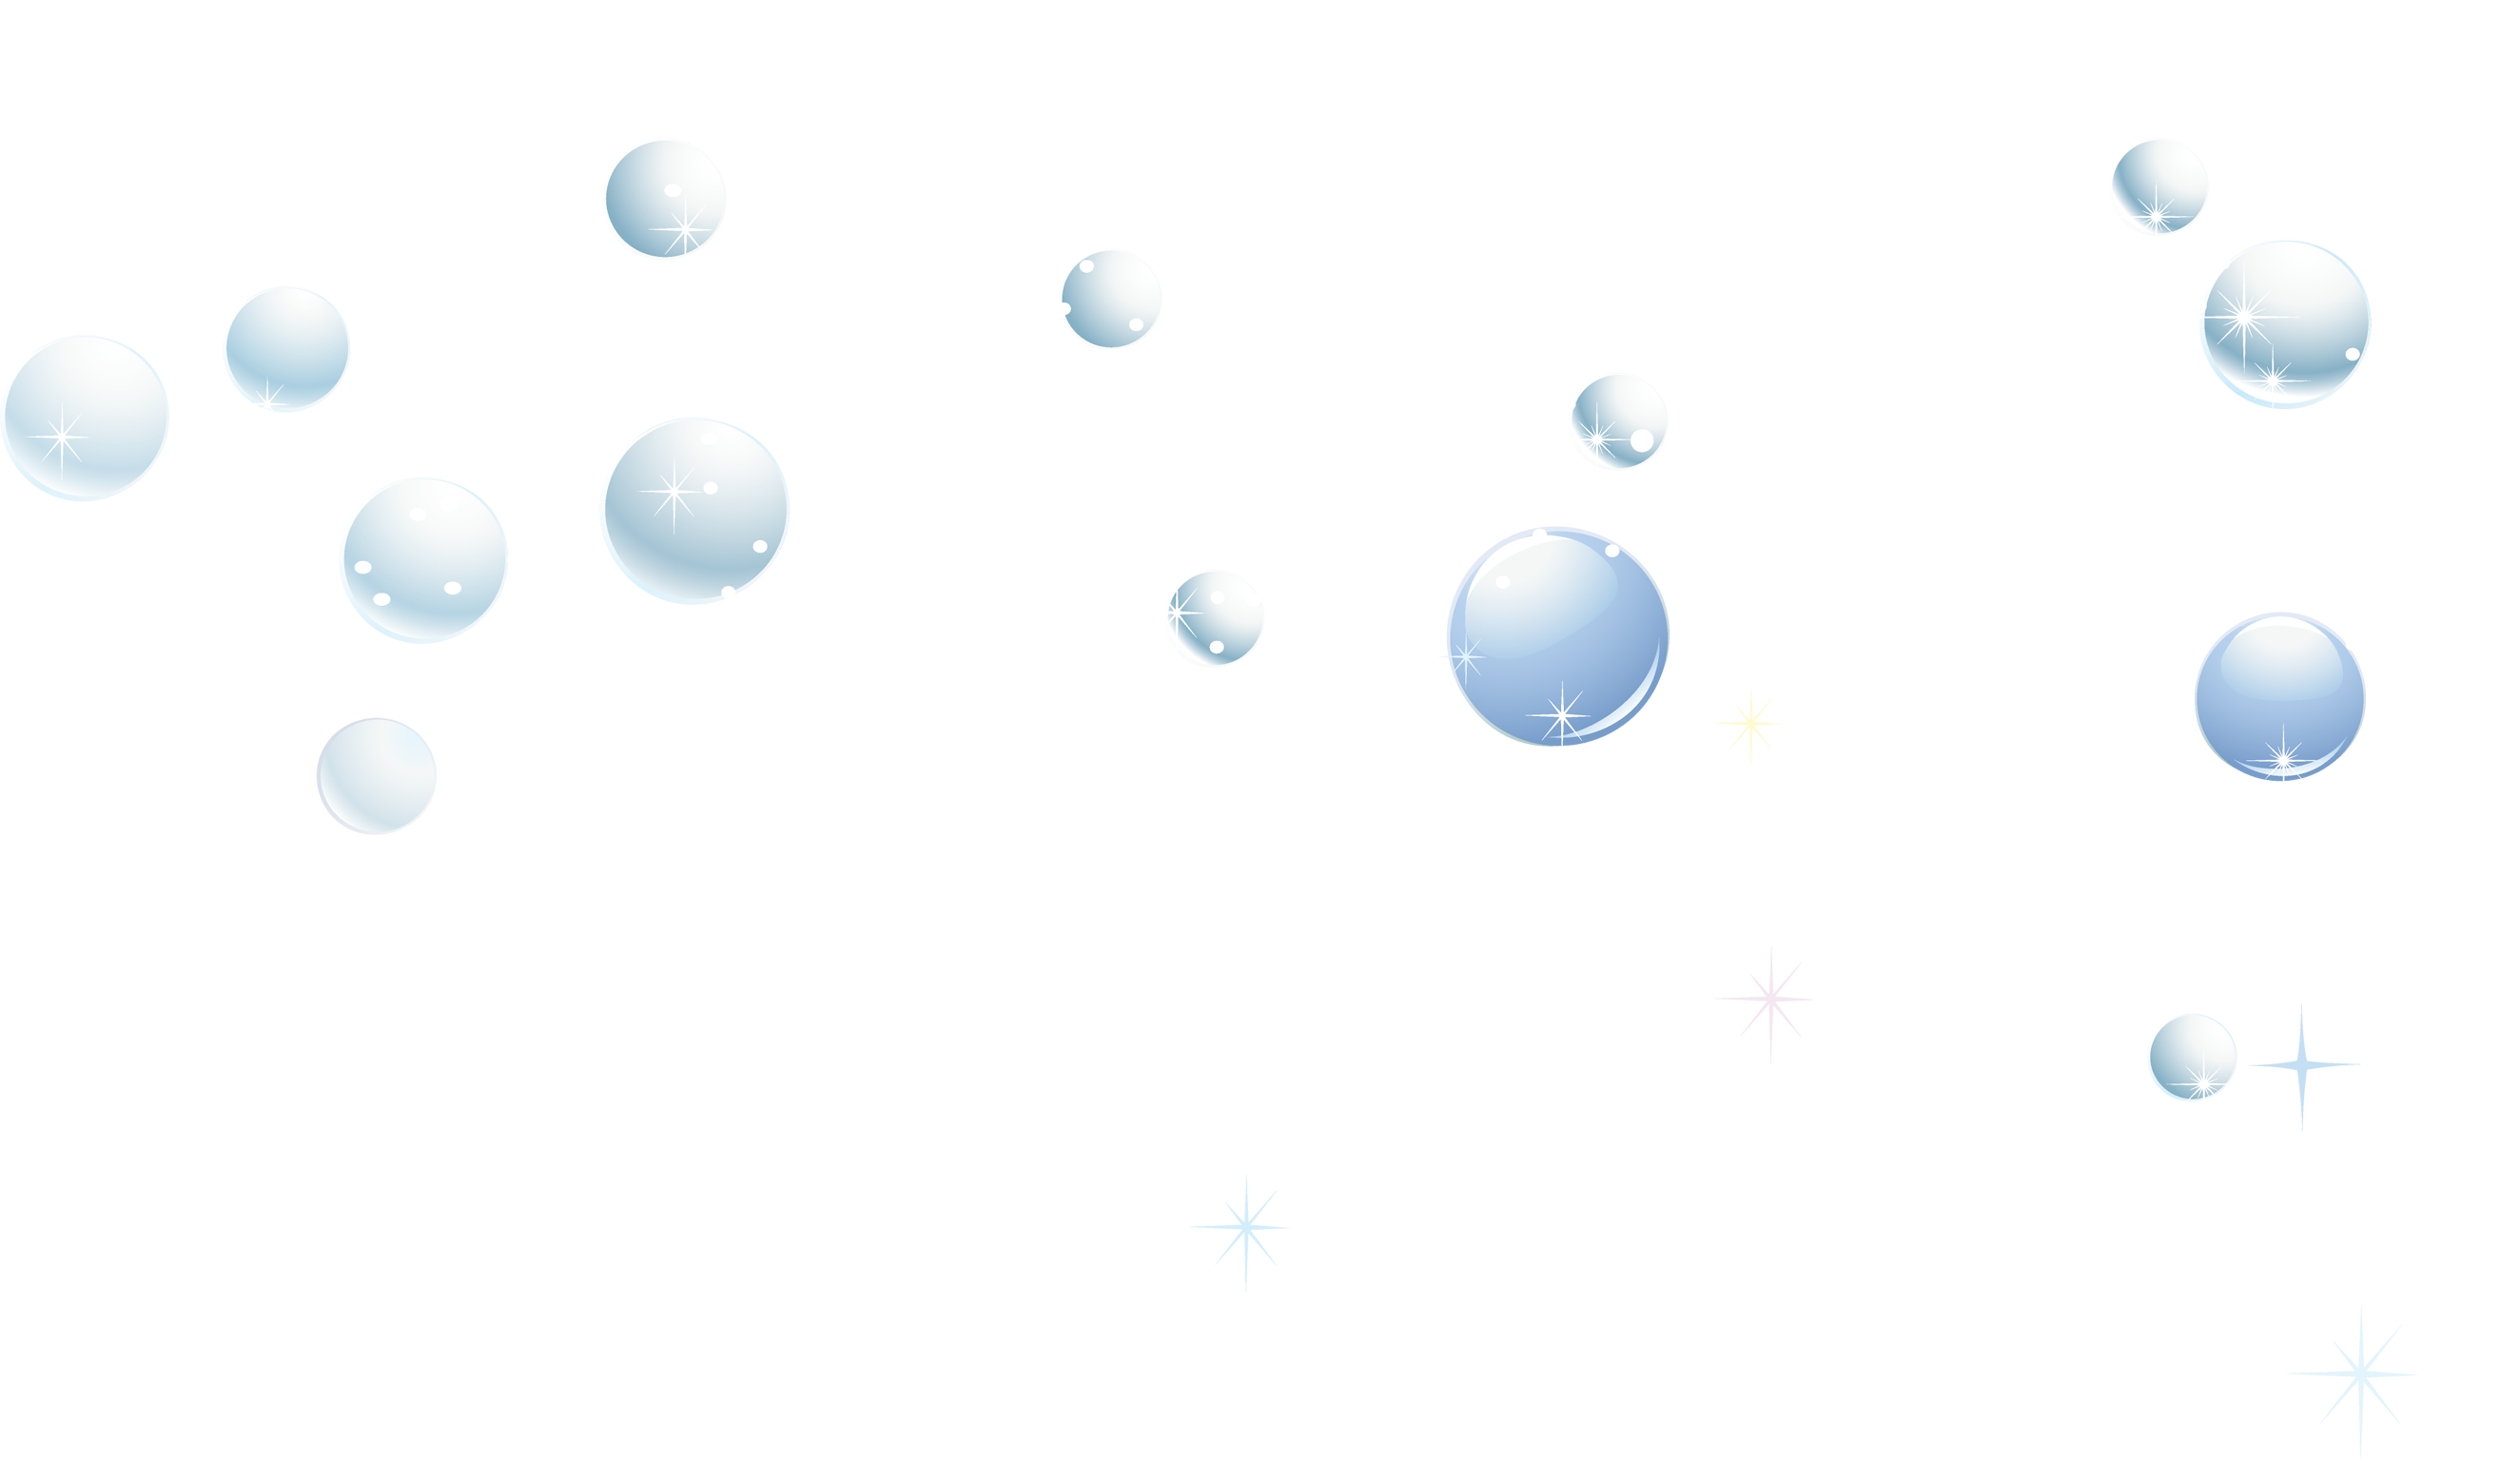 Snow png jokingart com. Clipart snowflake transparent background